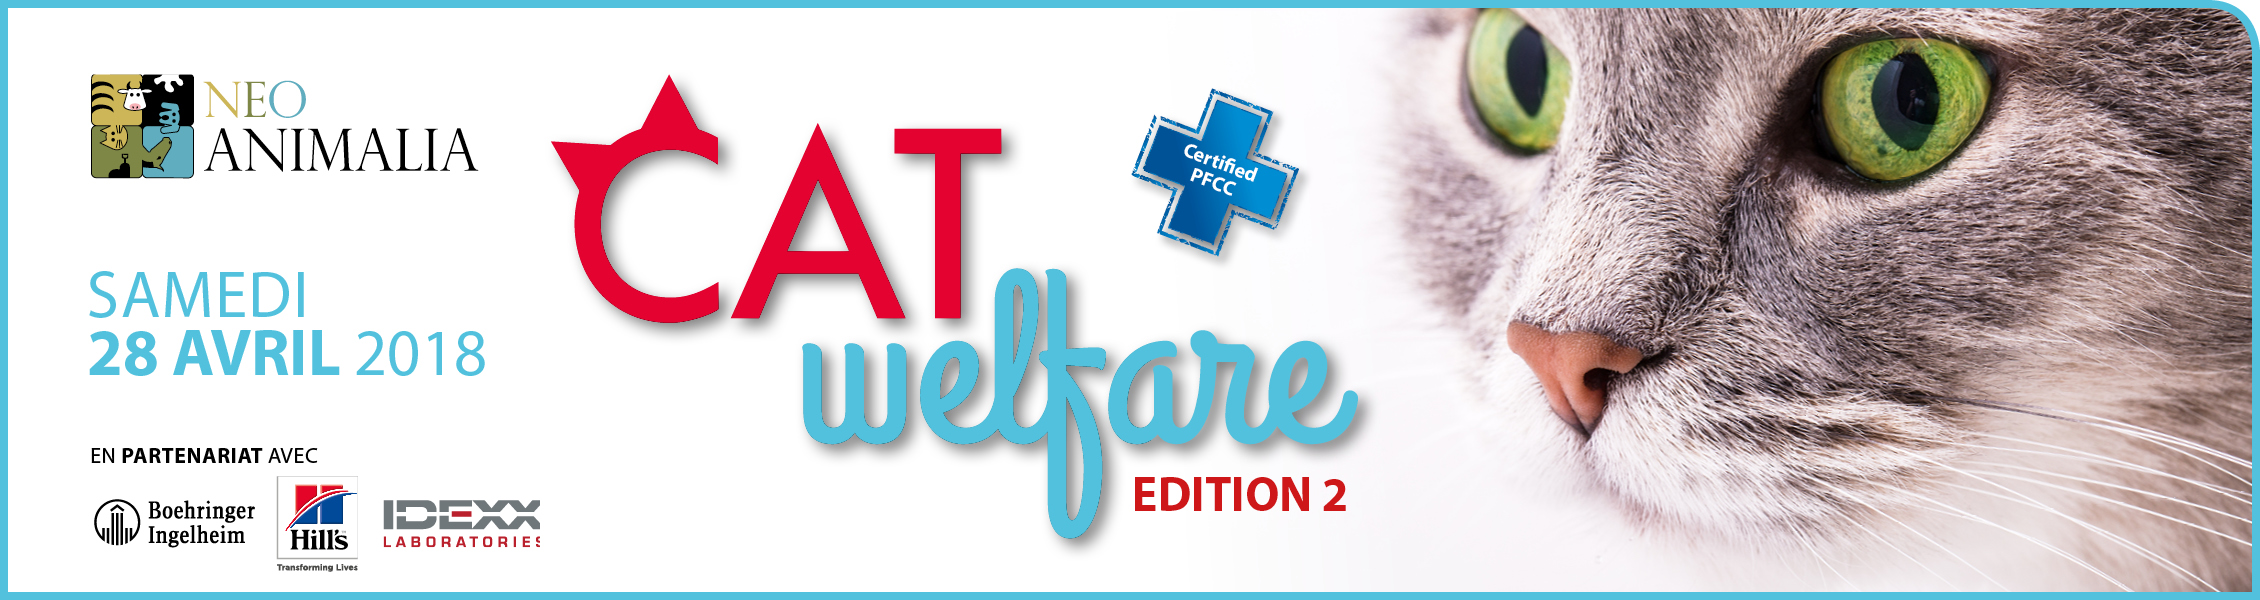 CAT Welfare Édition 2 FR